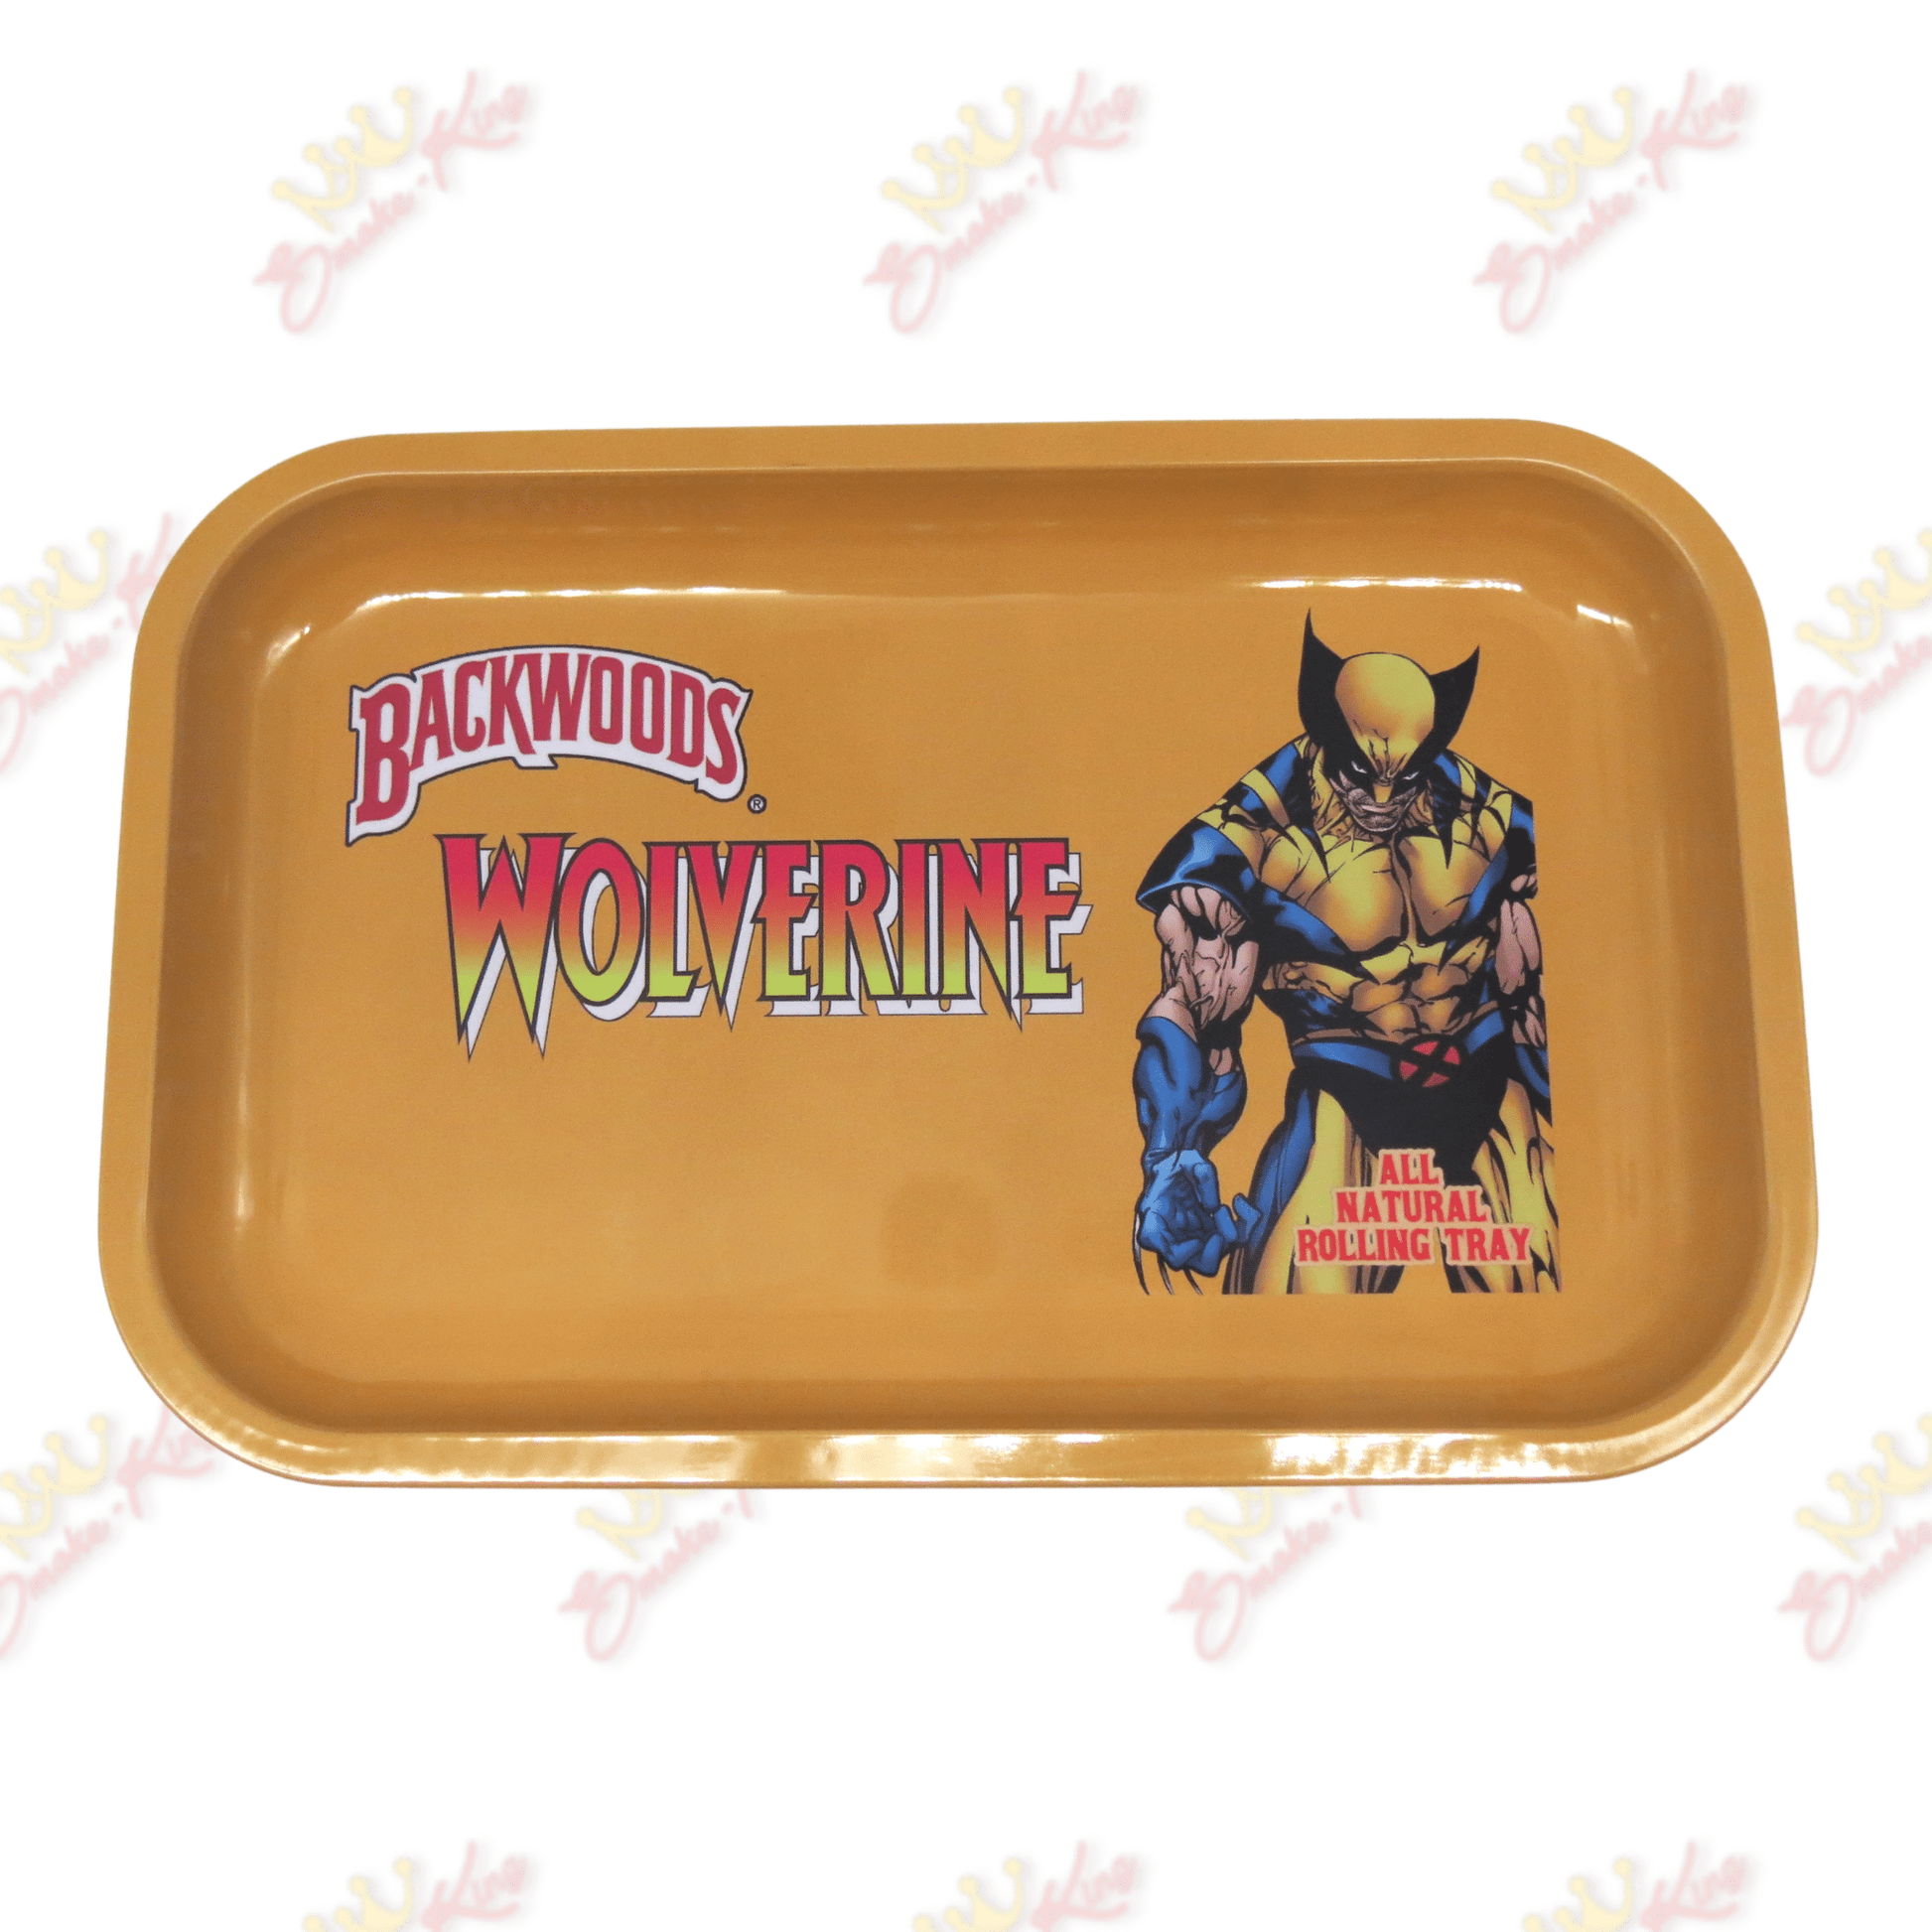 Smoke King rolling-trays Wolverine Rolling Tray Wolverine Rolling Tray | Smoke King